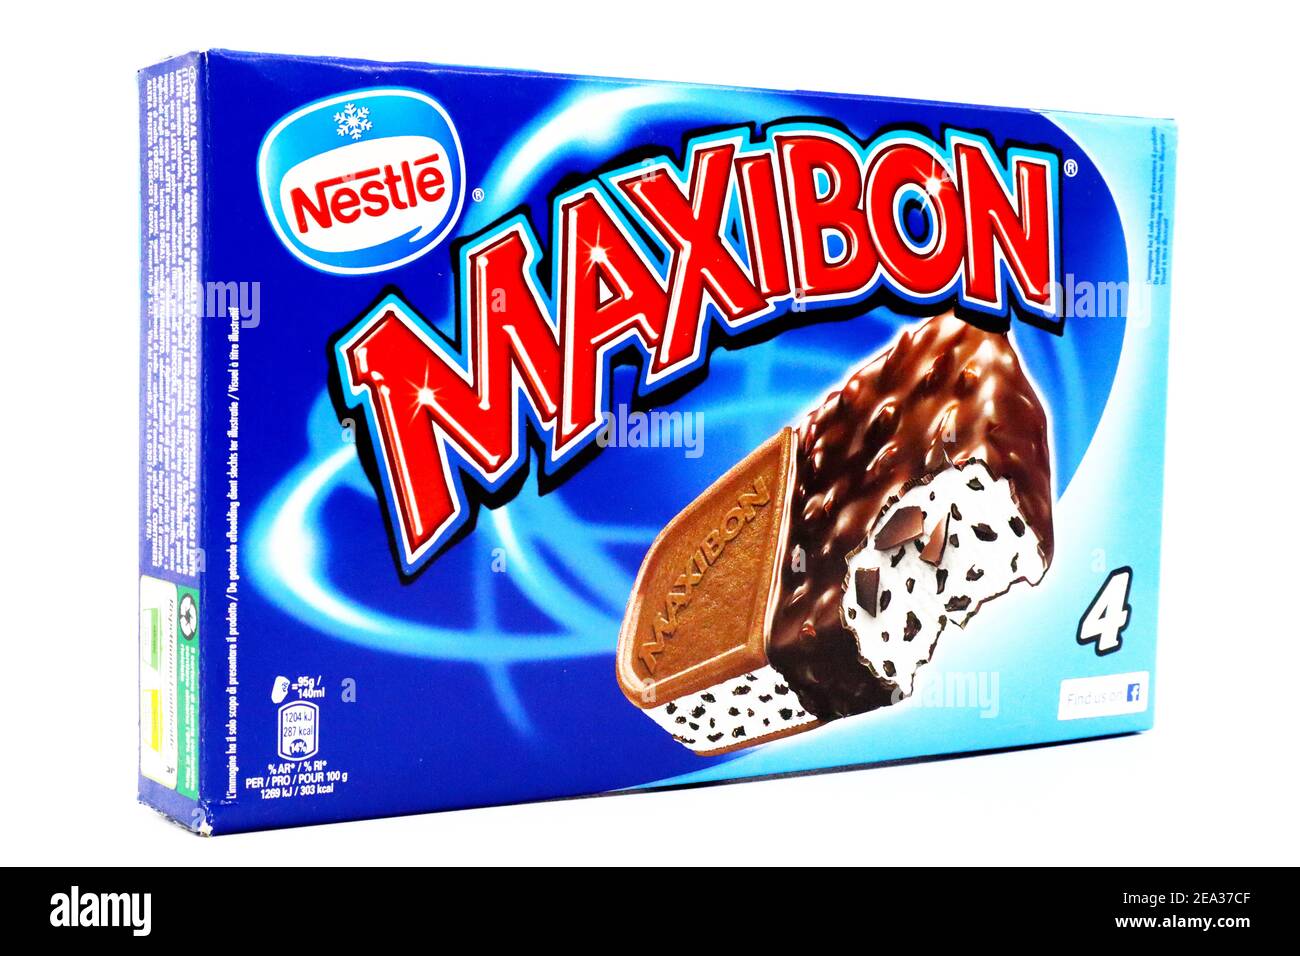 MAXIBON Ice Cream. Maxibon is a brand of Nestlé Stock Photo - Alamy